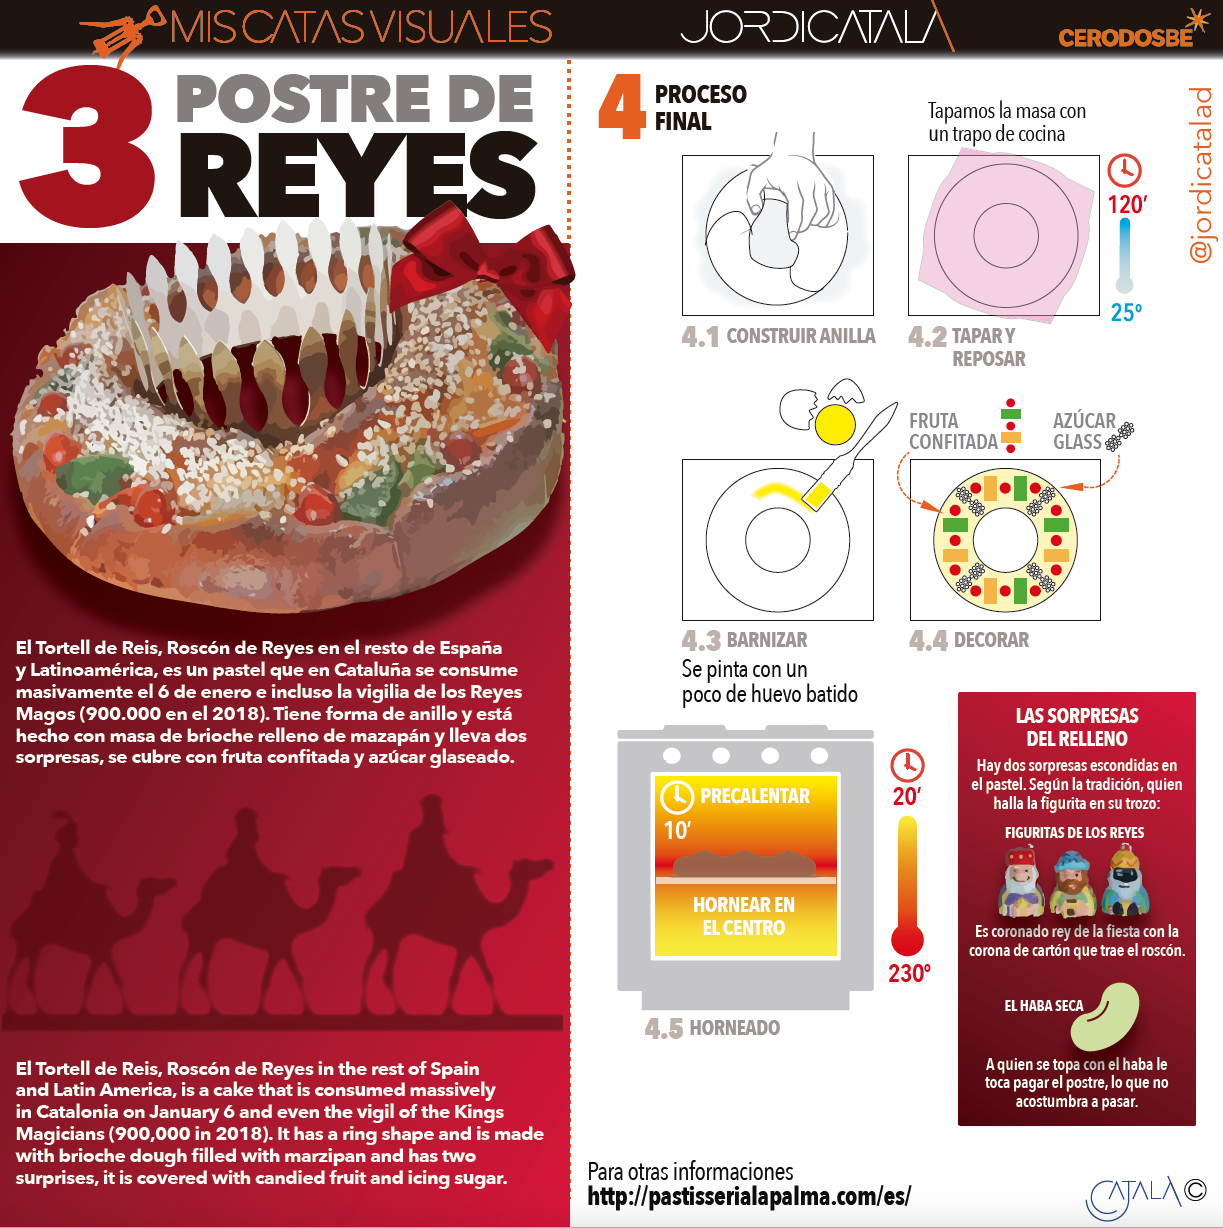 Info 3: Postre de Reyes